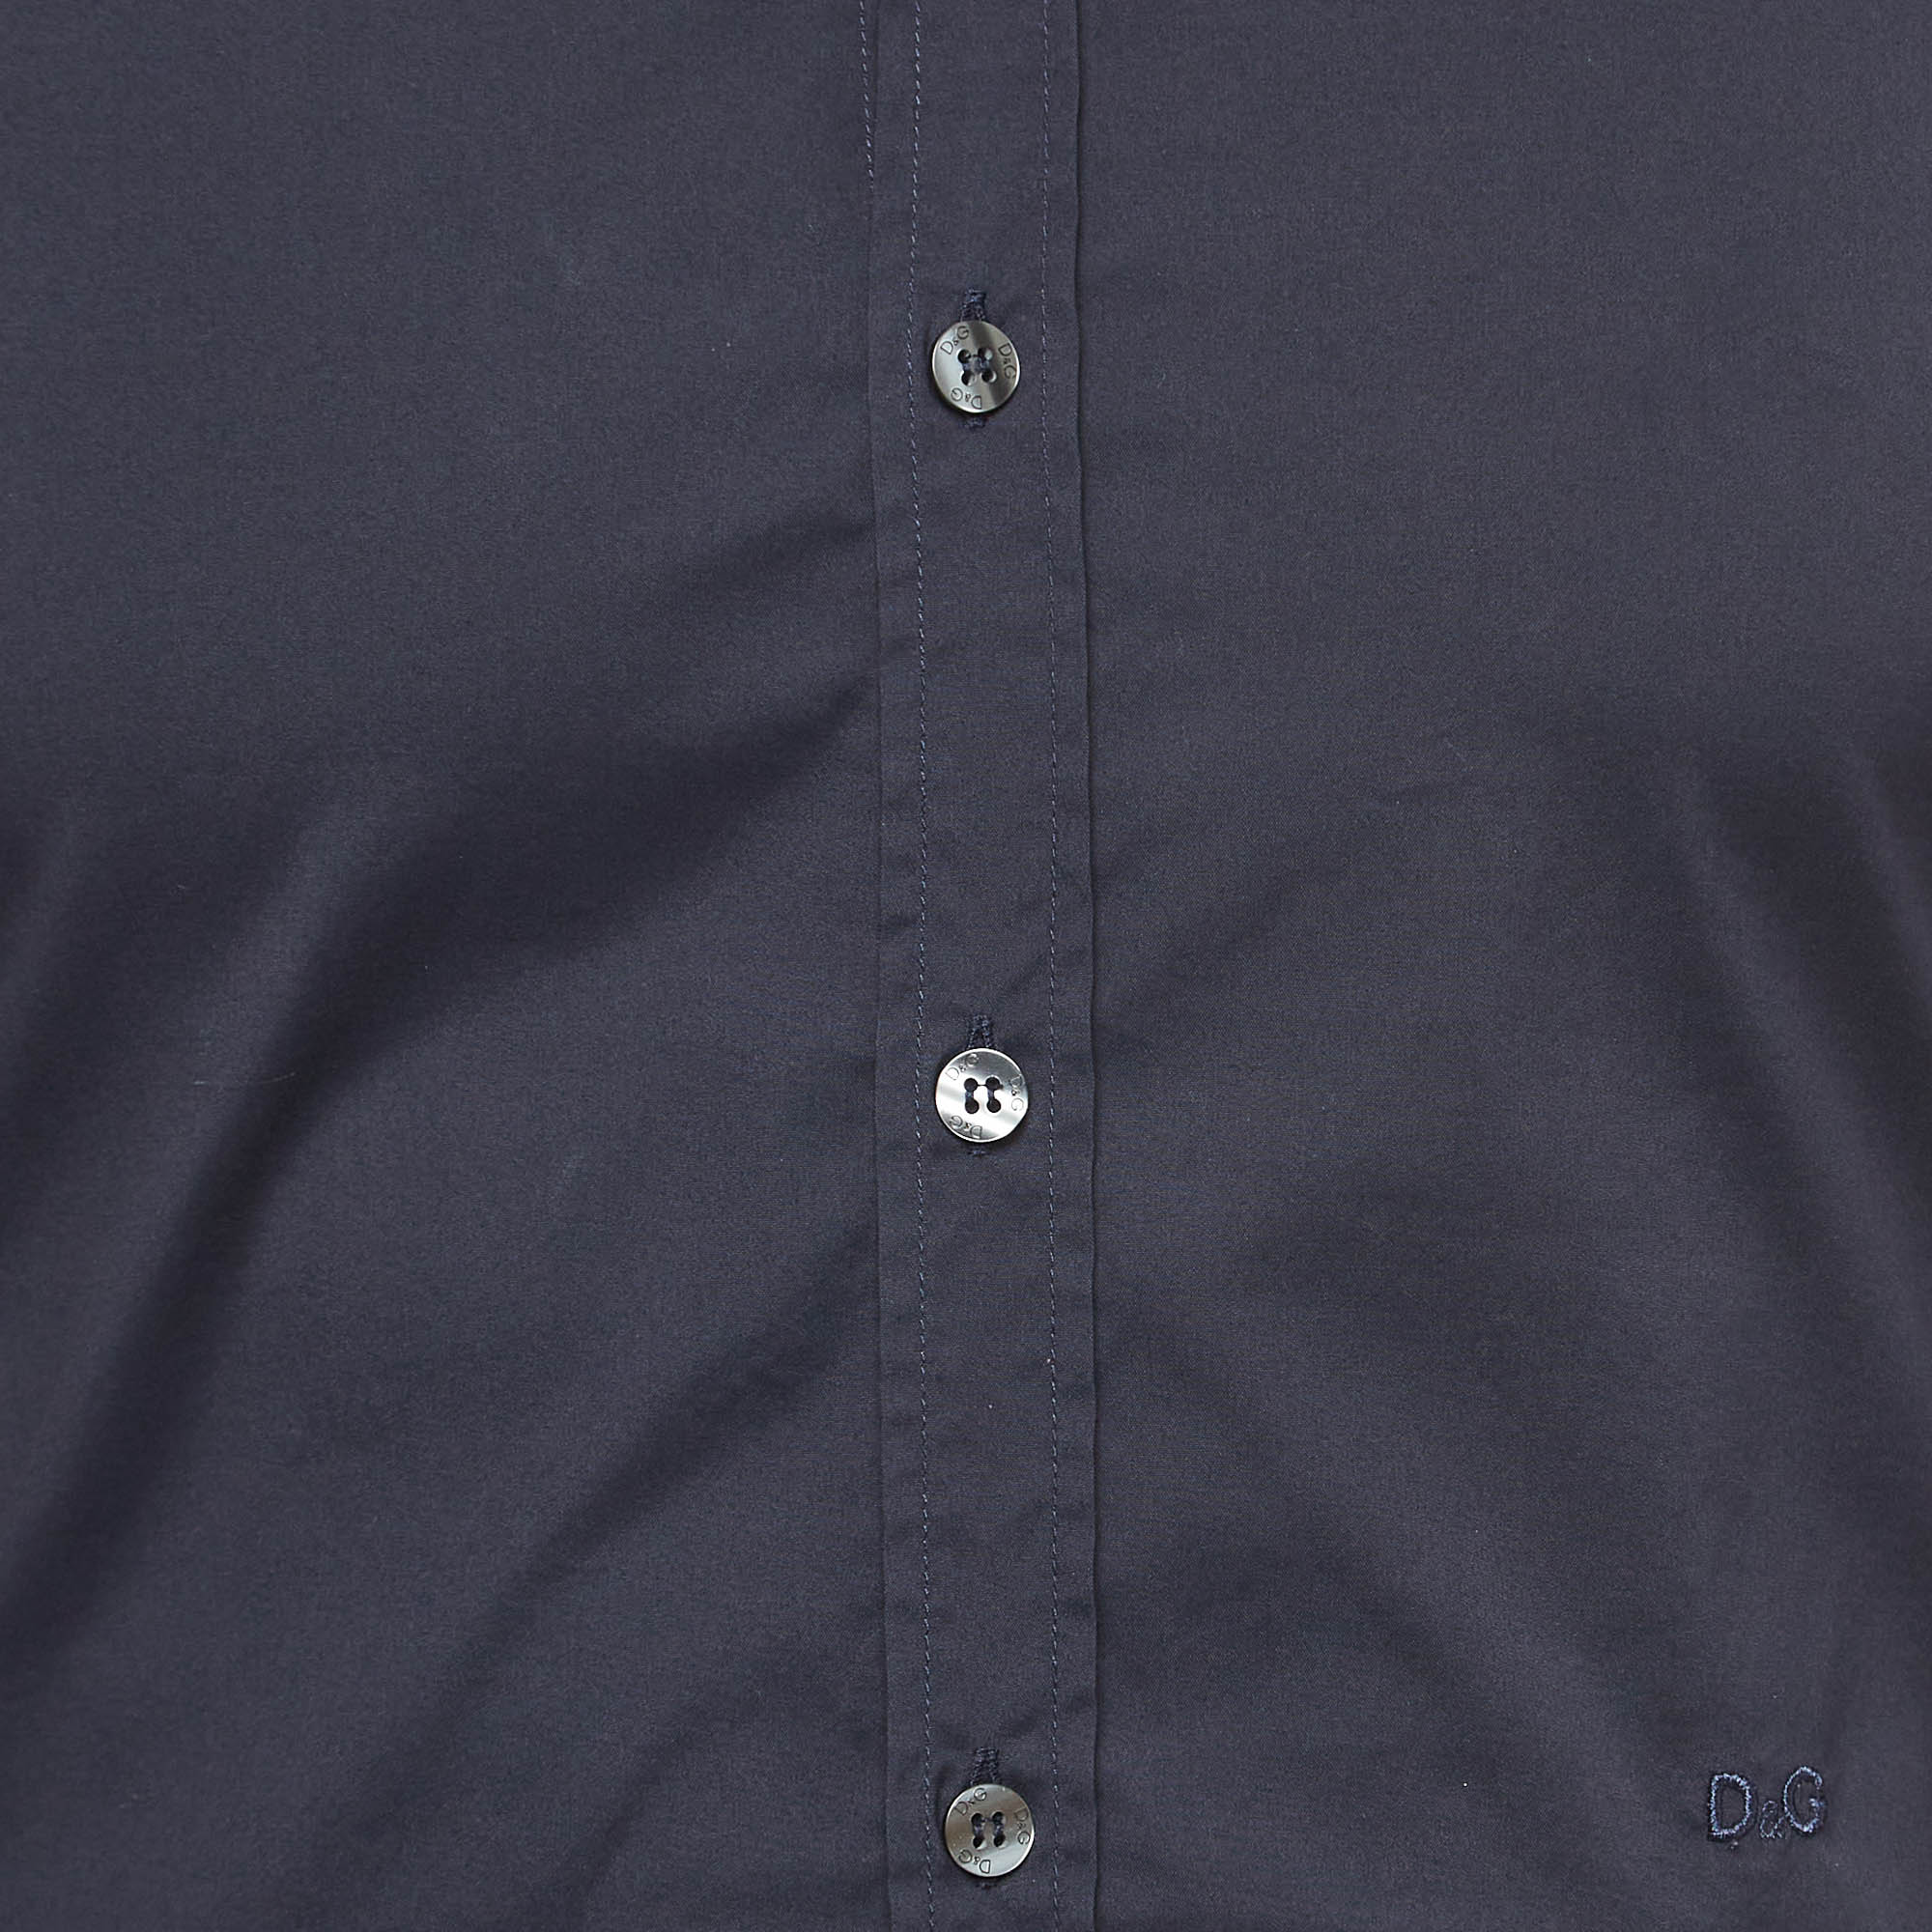 D&G Brad Navy Blue Cotton Button Front Full Sleeve Shirt S